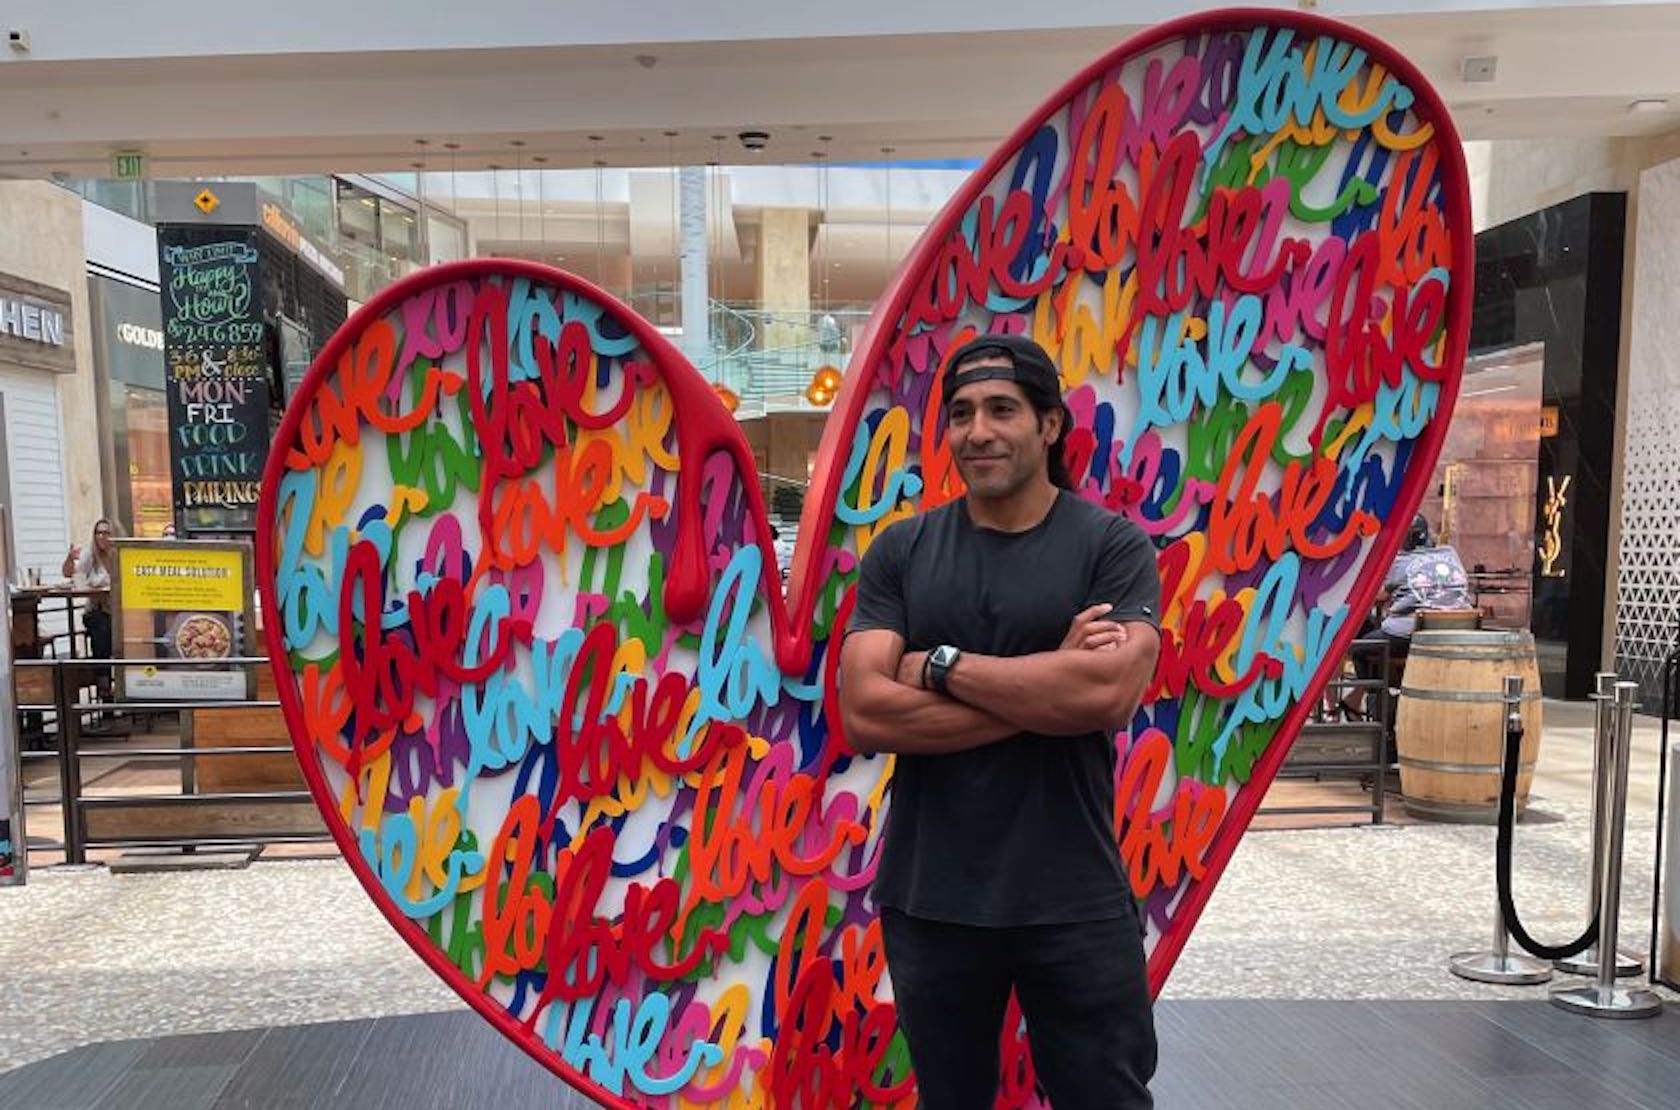 Ruben Rojas and Westfield Topanga Mall Celebrate A “Summer of Love